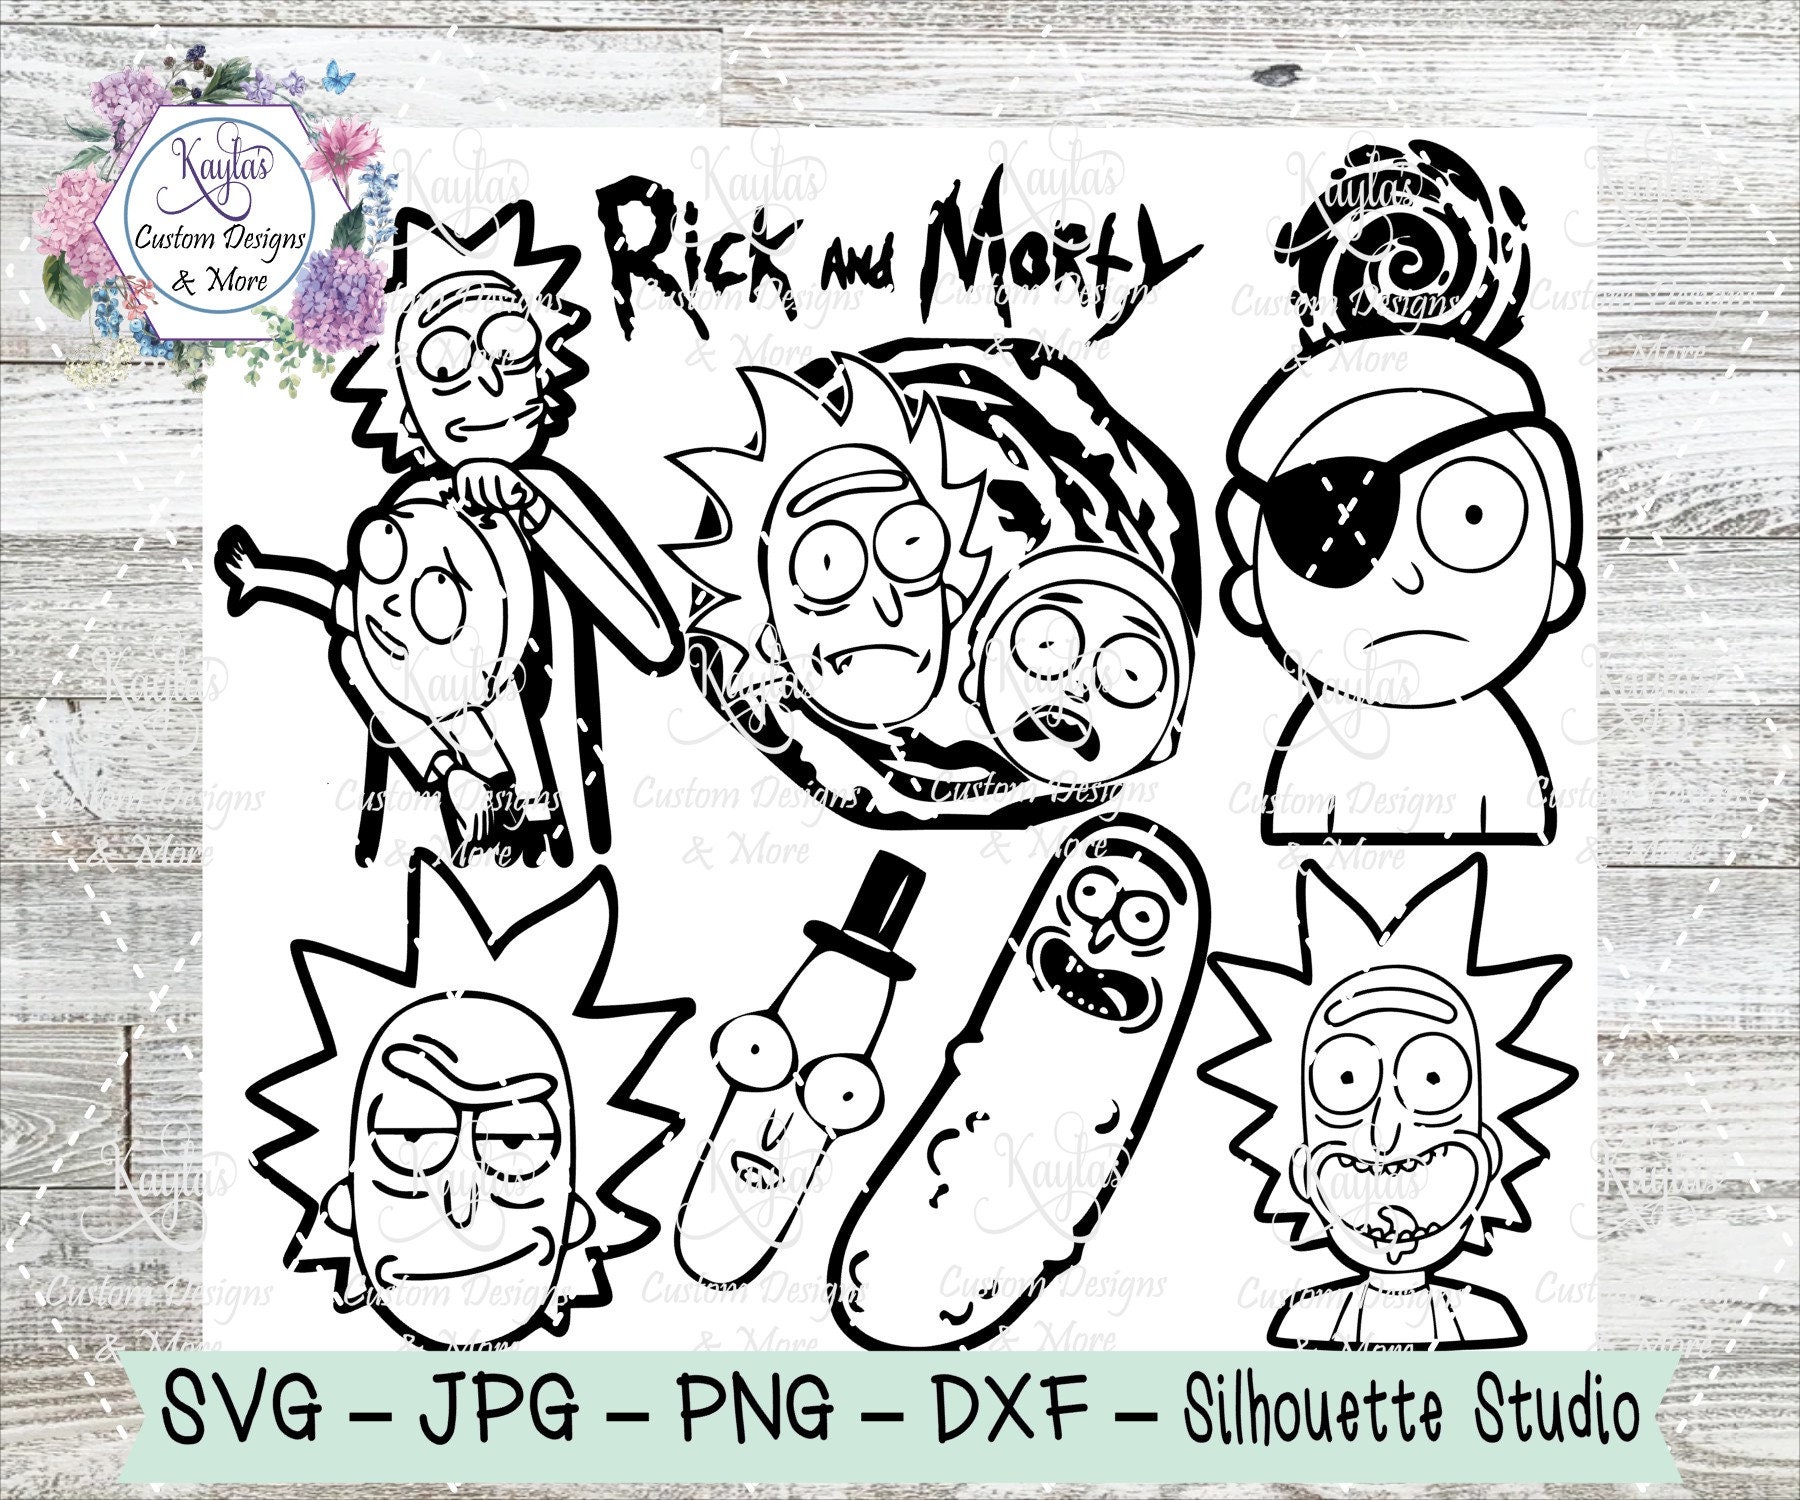 Rick and Morty Season 1 Episode 1 Pilot Breakdown - YouTube